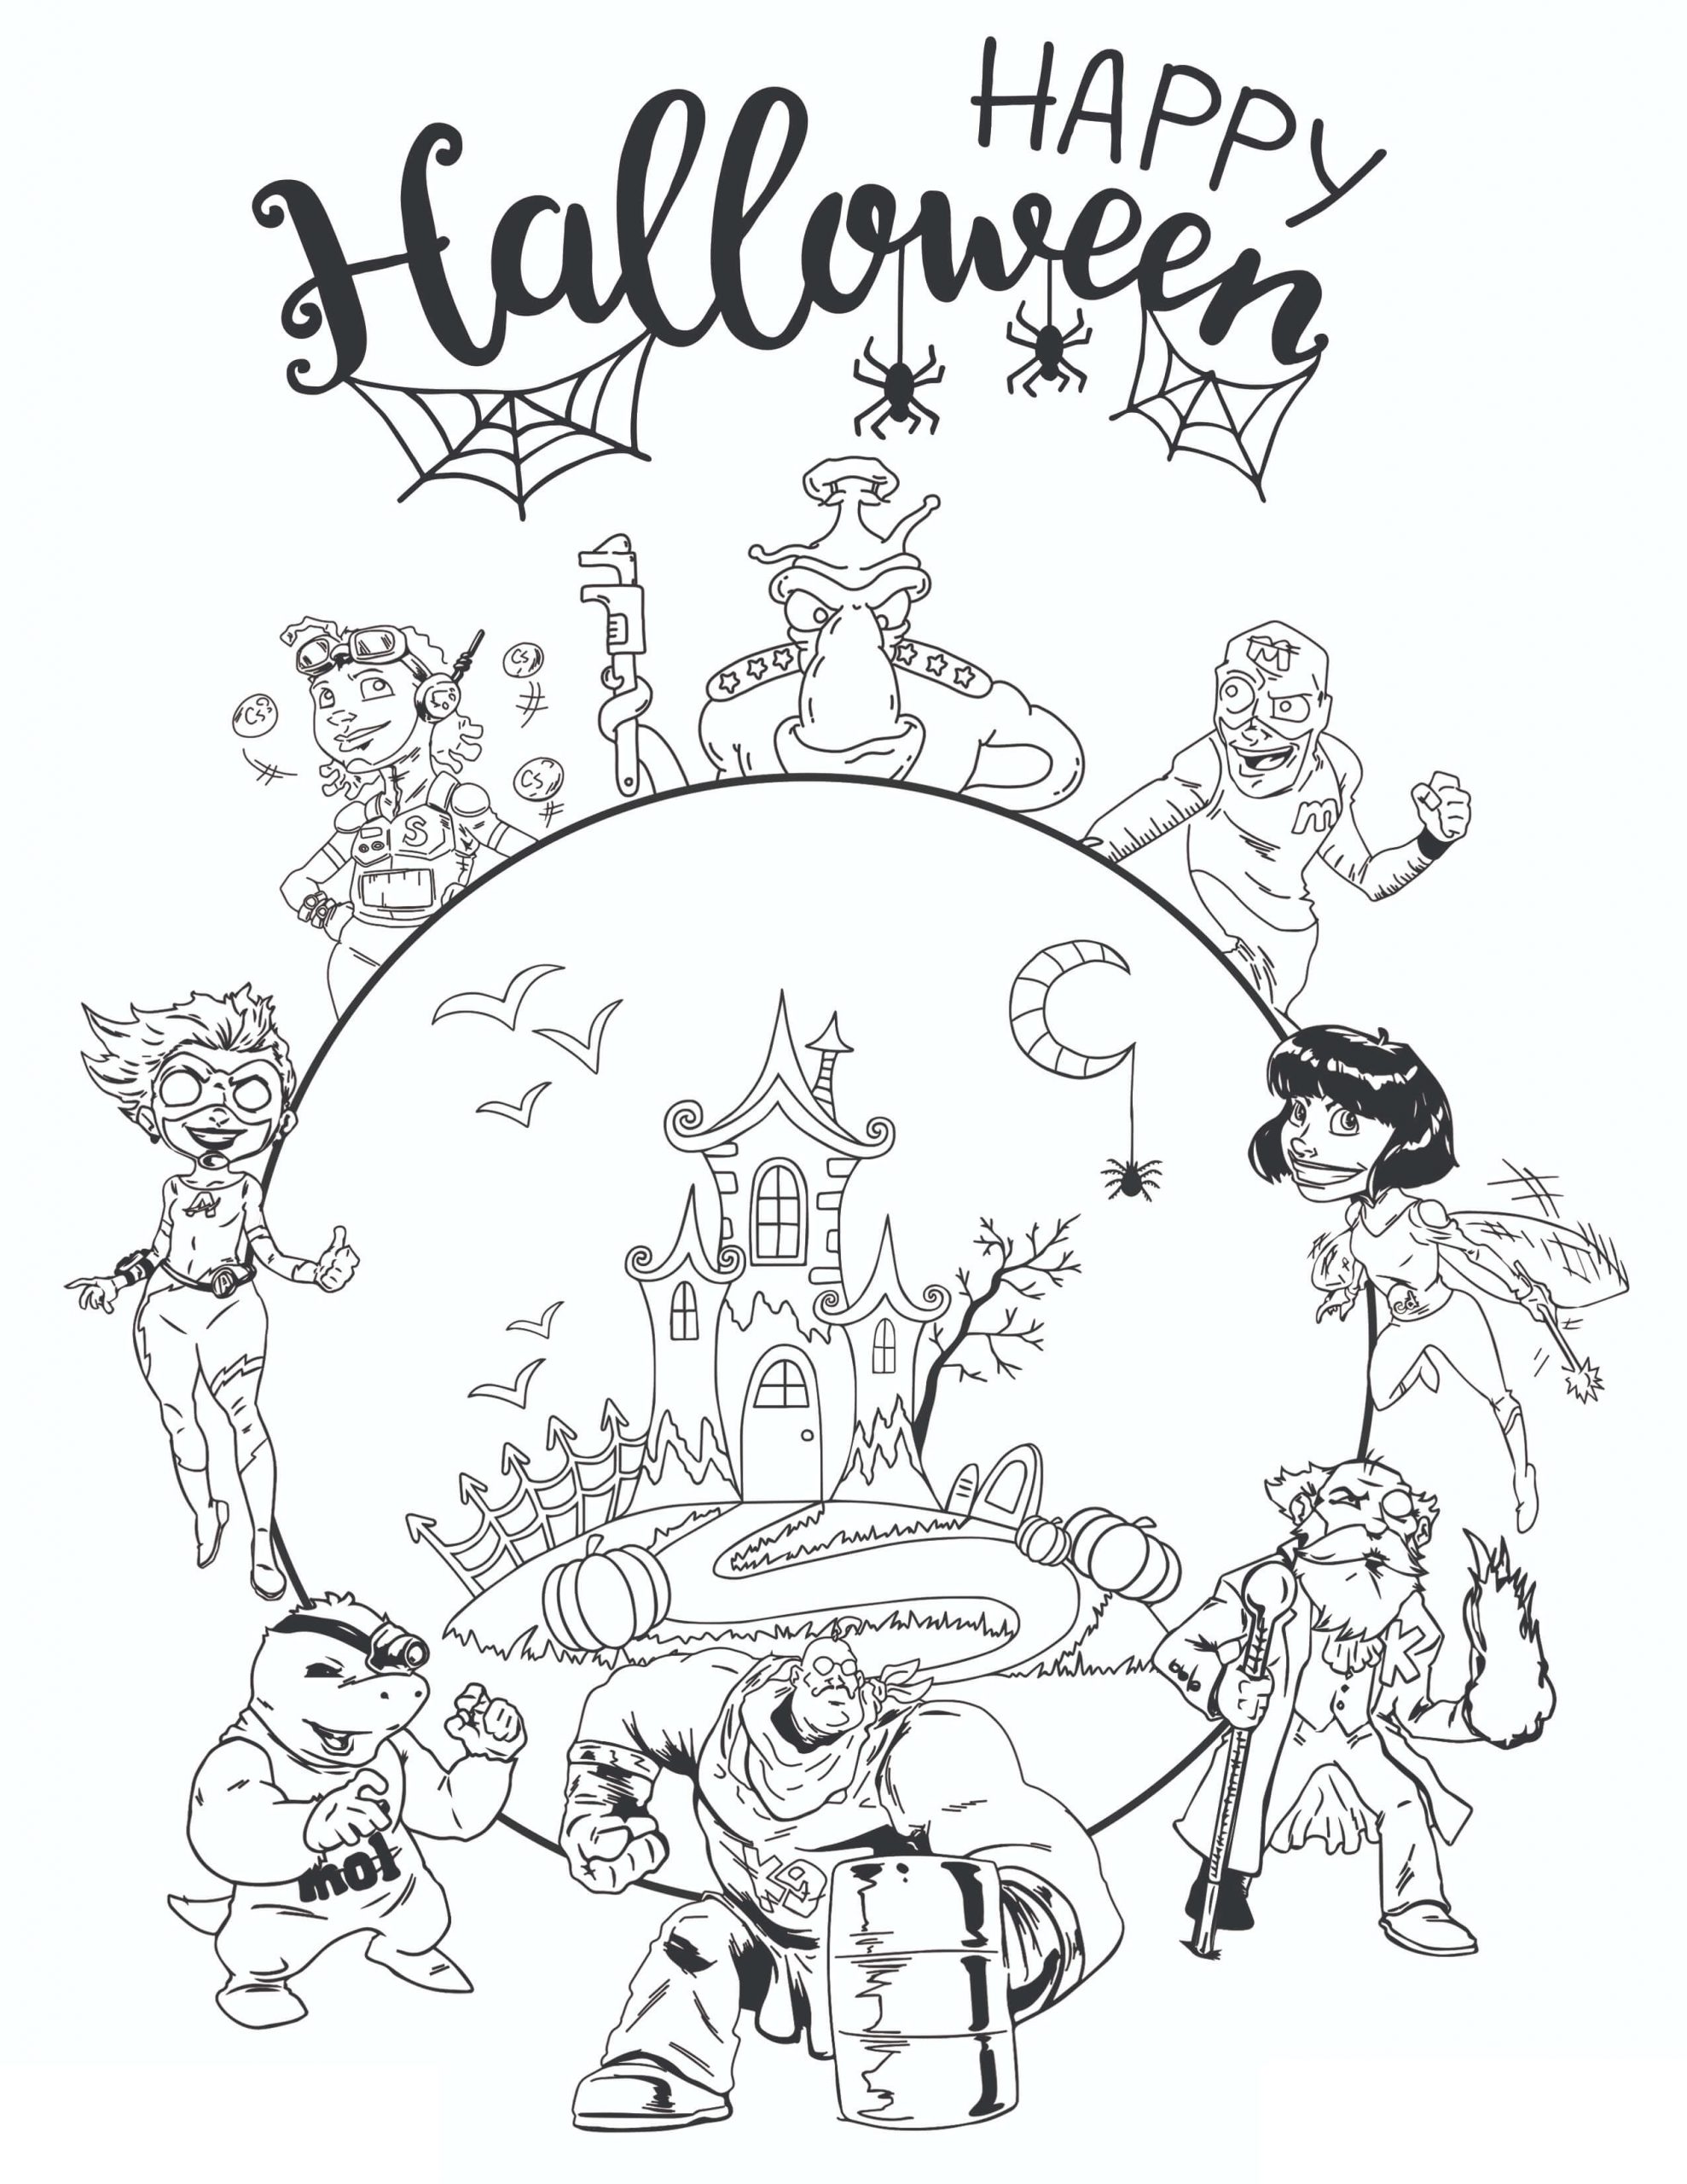 Joyeux Halloween coloring page